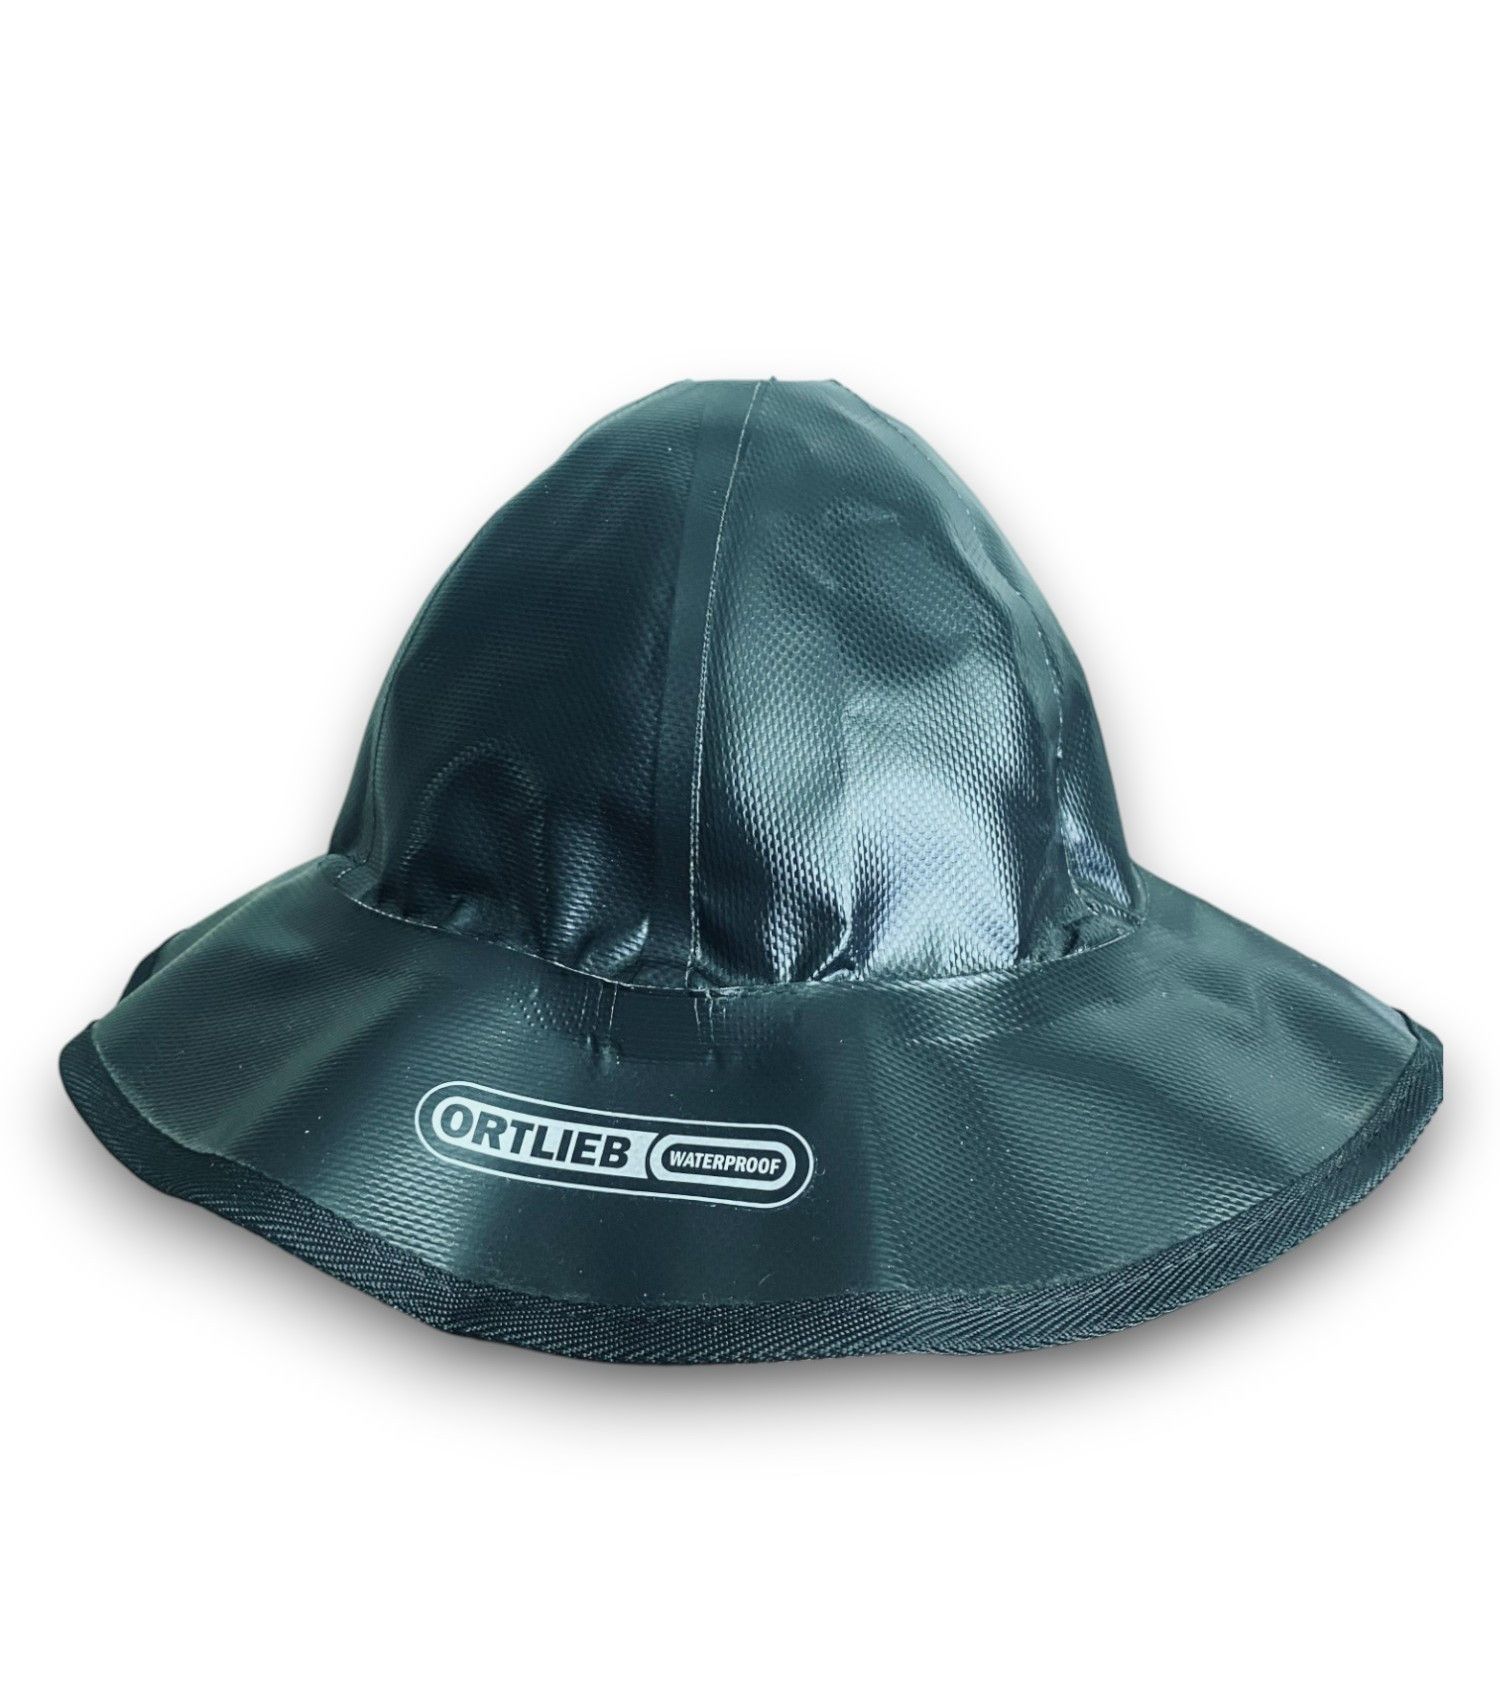 Outdoor Life - Ortlieb Boonie Hat Waterproof Rare Black Gorcope Goretex - 2